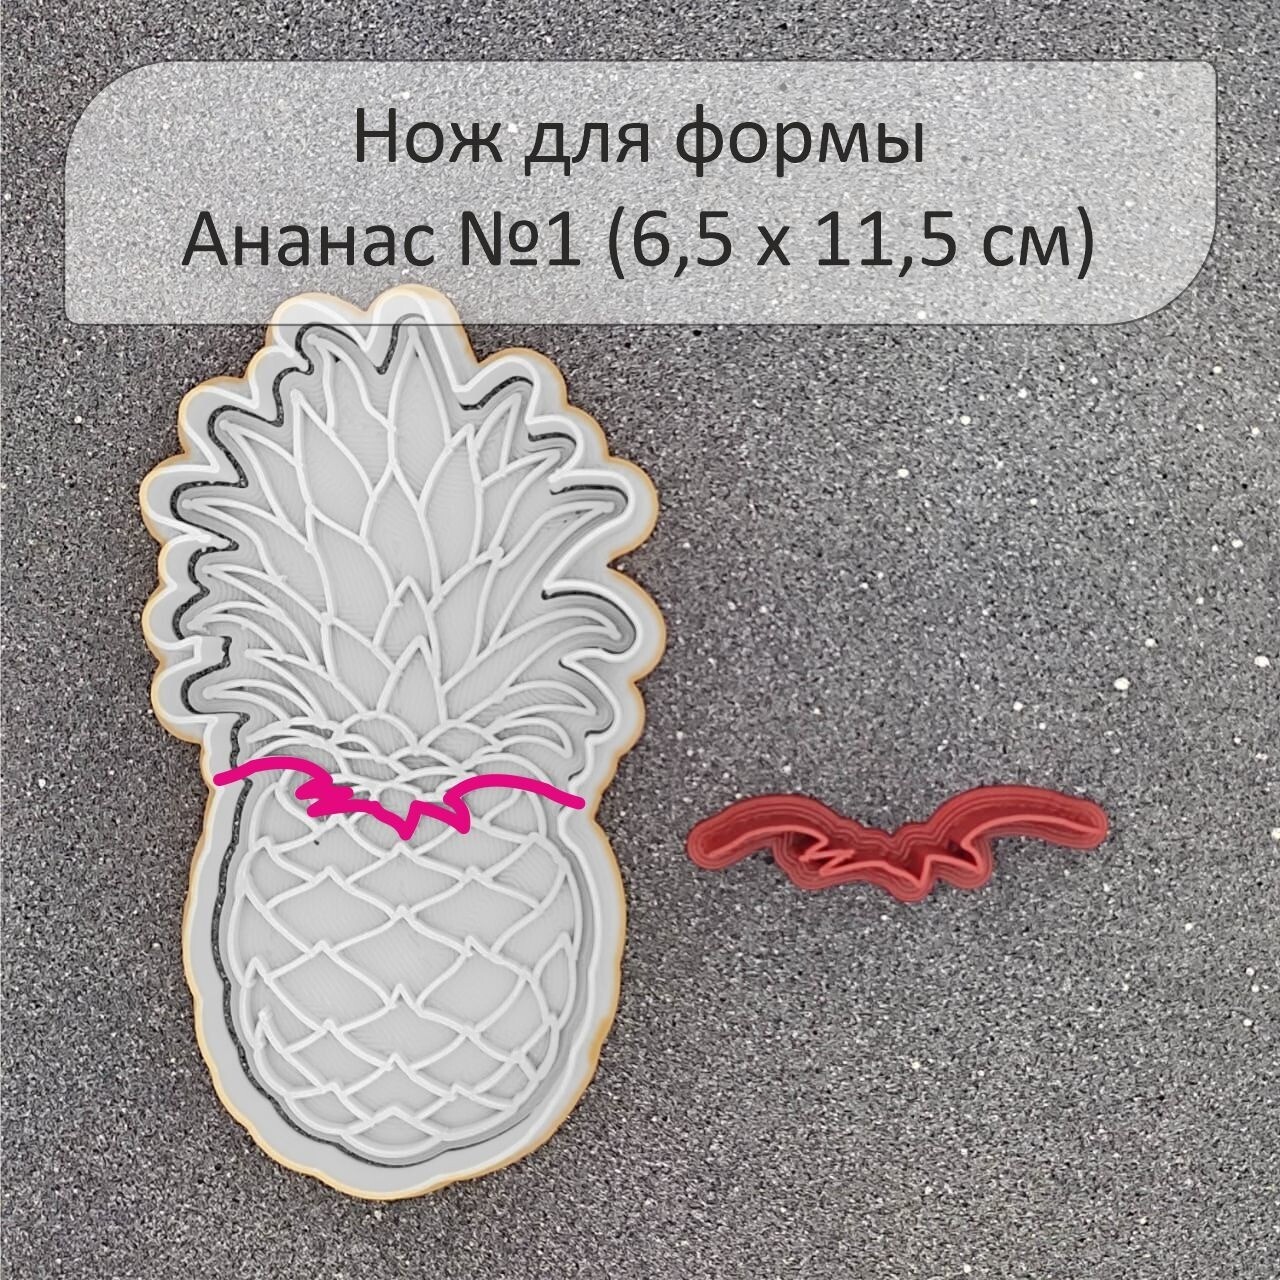 Нож для формы "Ананас №1" (6,5 х 11,5 см)